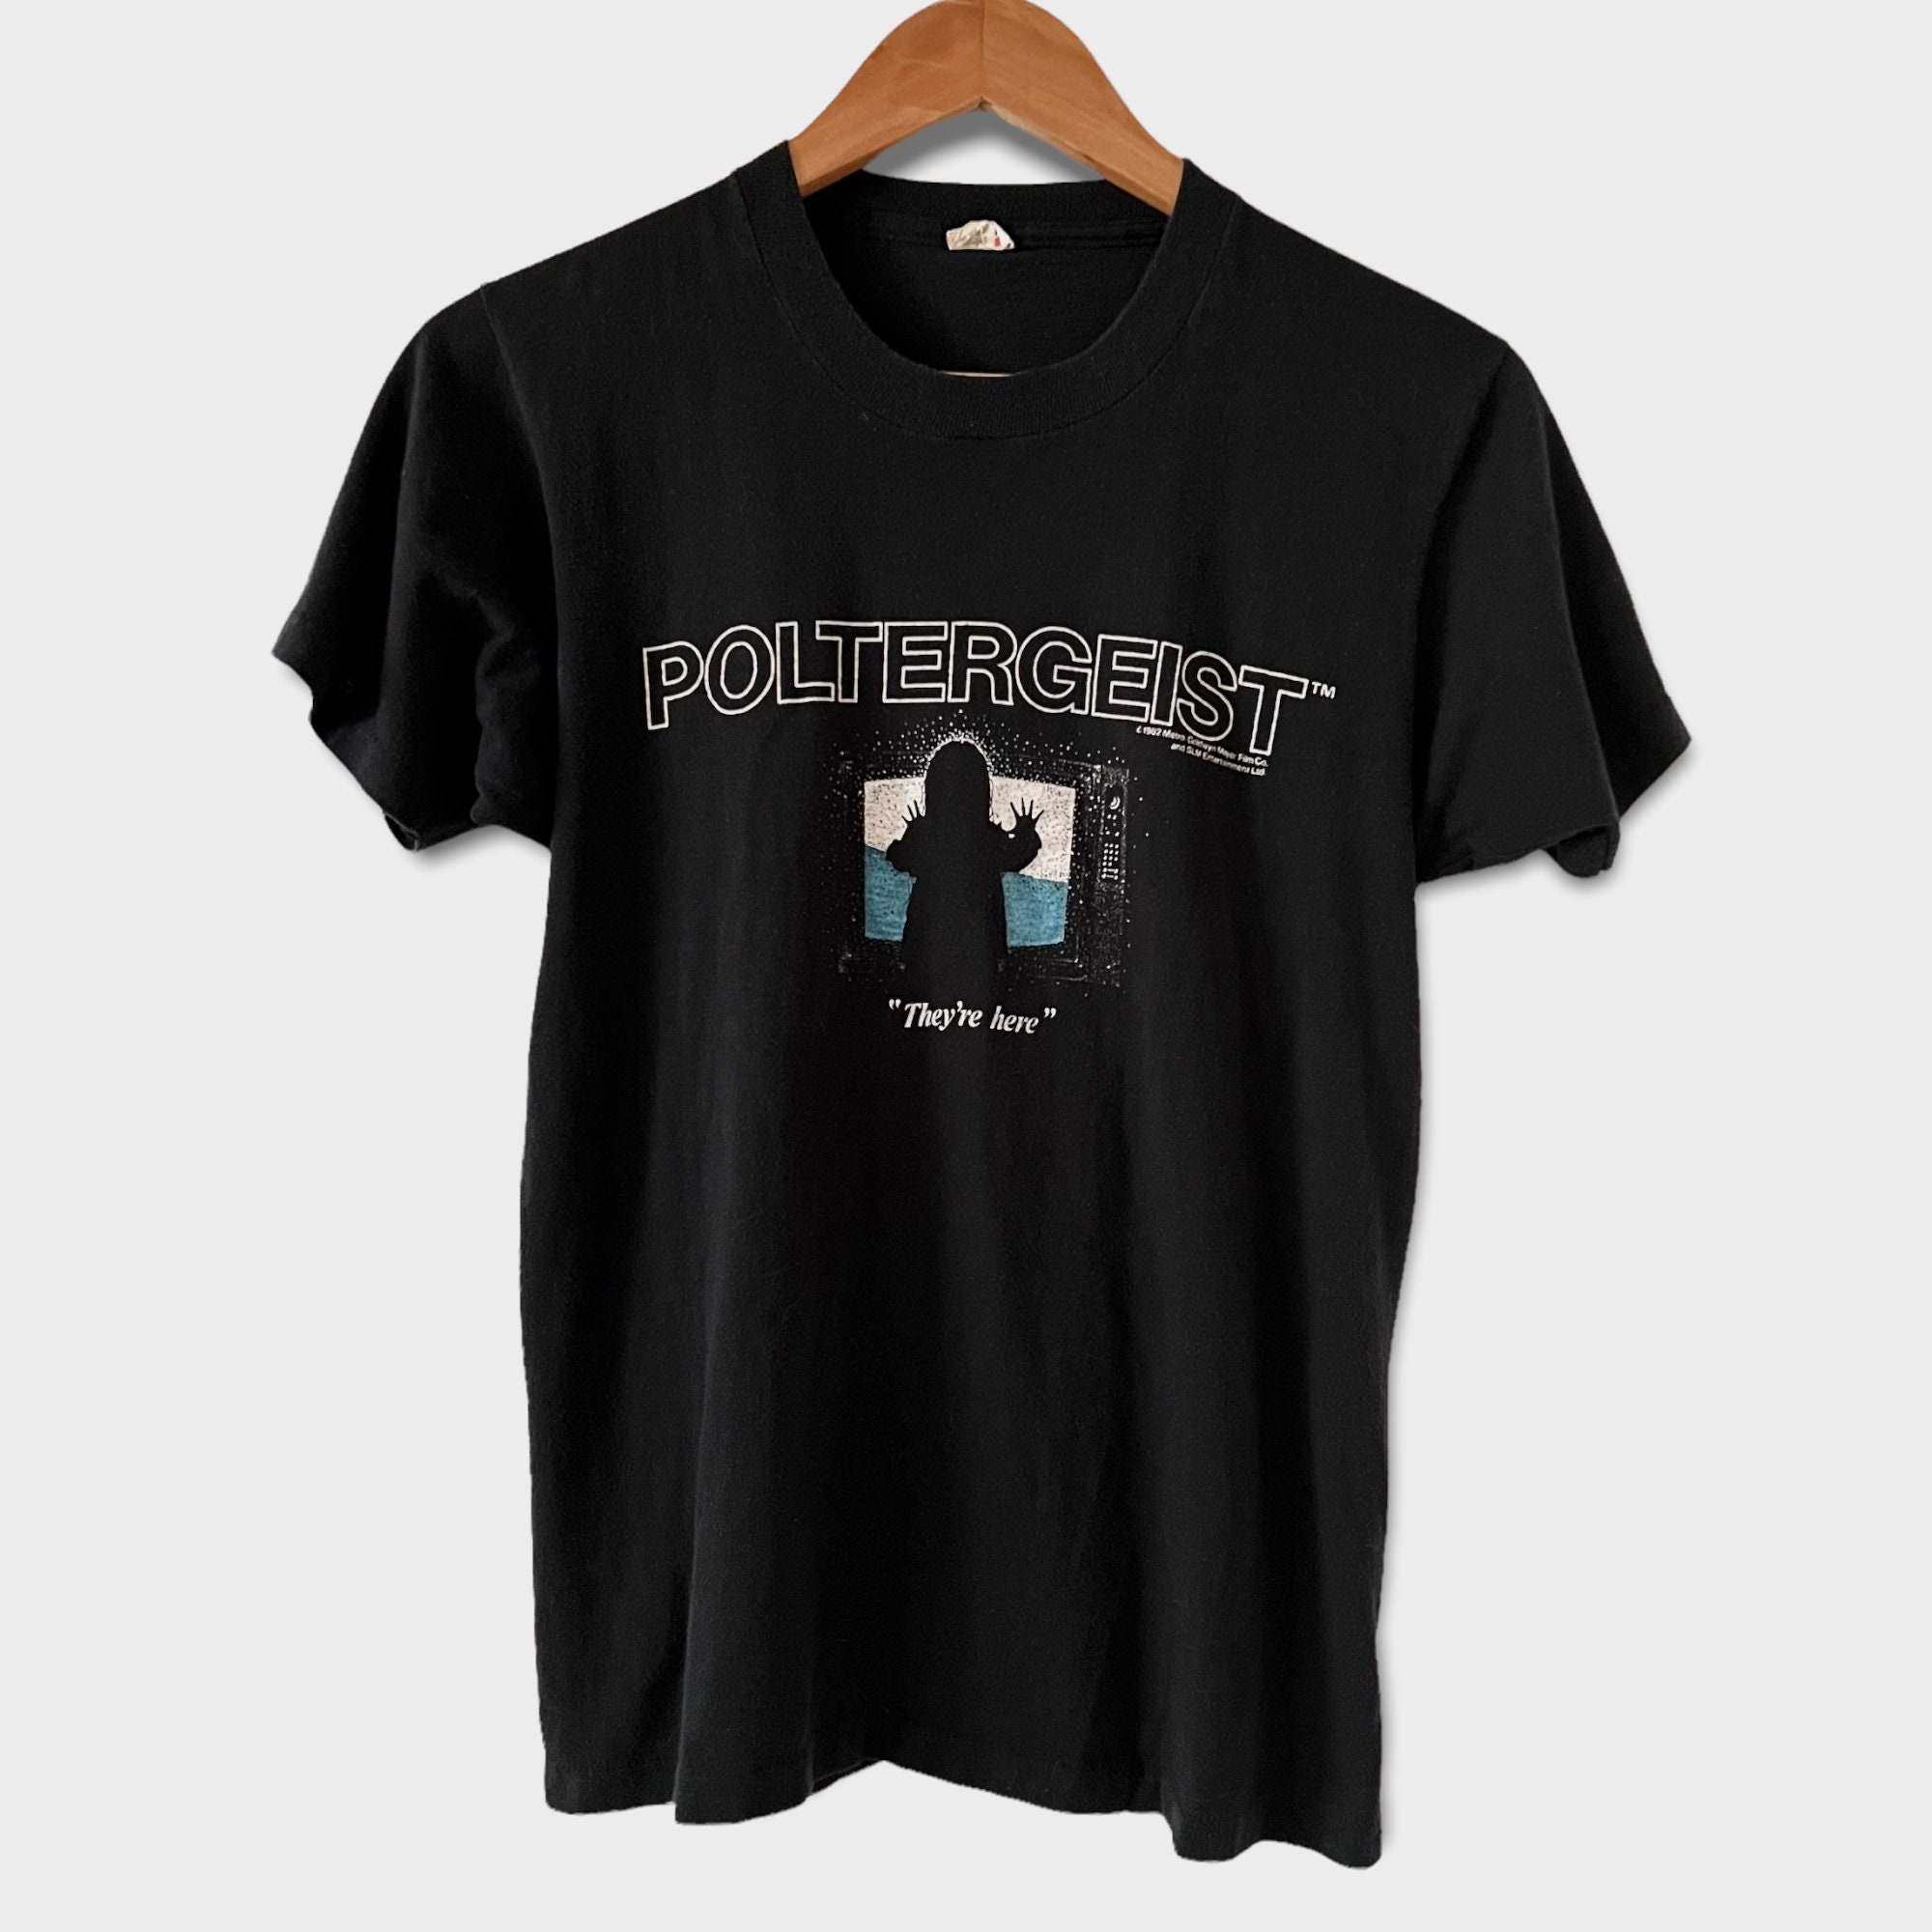 De Collector Promo Film Horror Vintage Shirt 00s Kleding Herenkleding Overhemden & T-shirts T-shirts T-shirts met print 